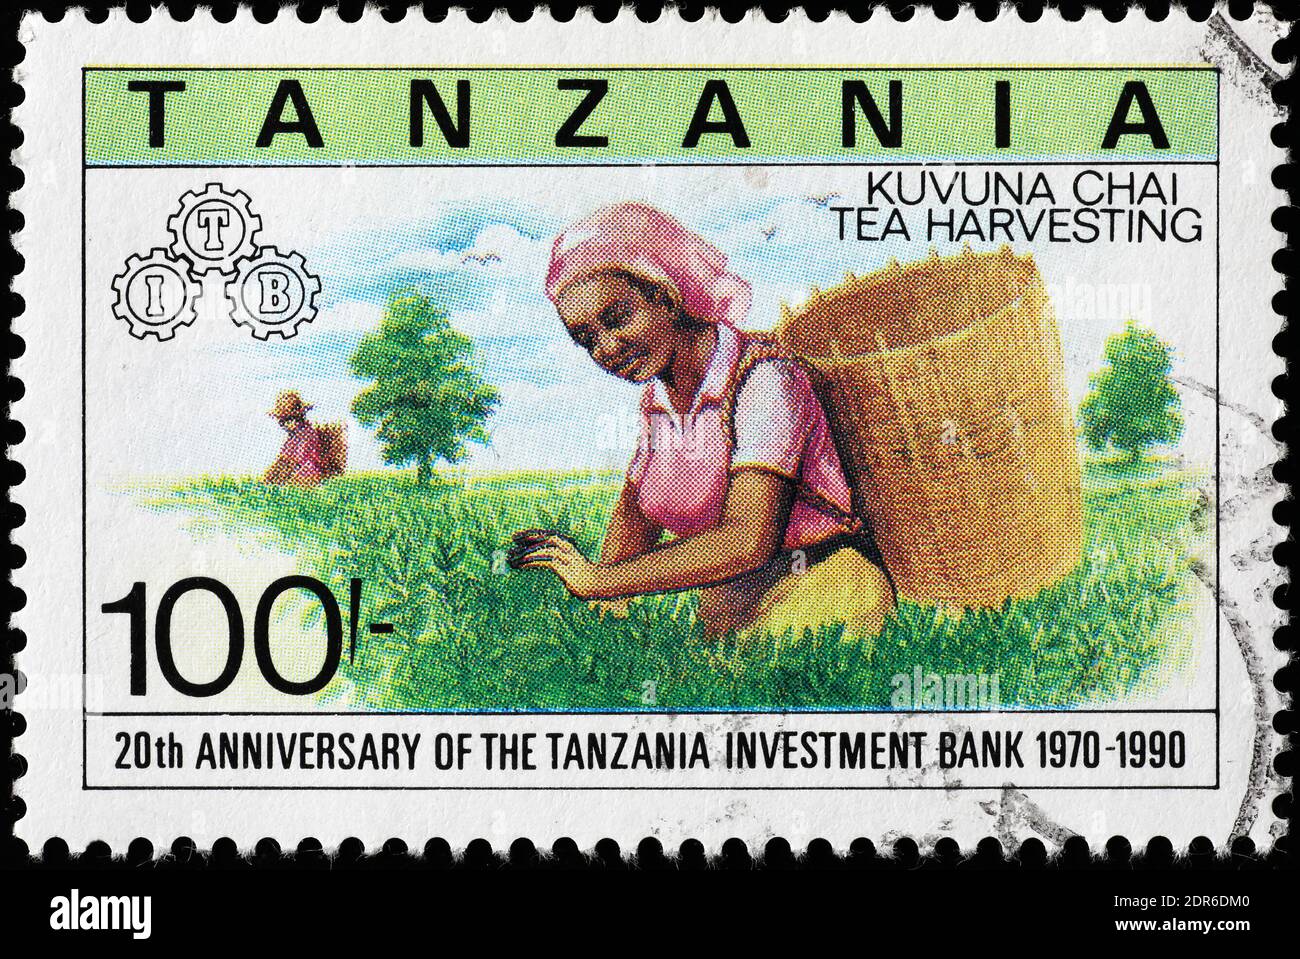 Women harvesting tea on tanzanian postage stamp Stock Photo